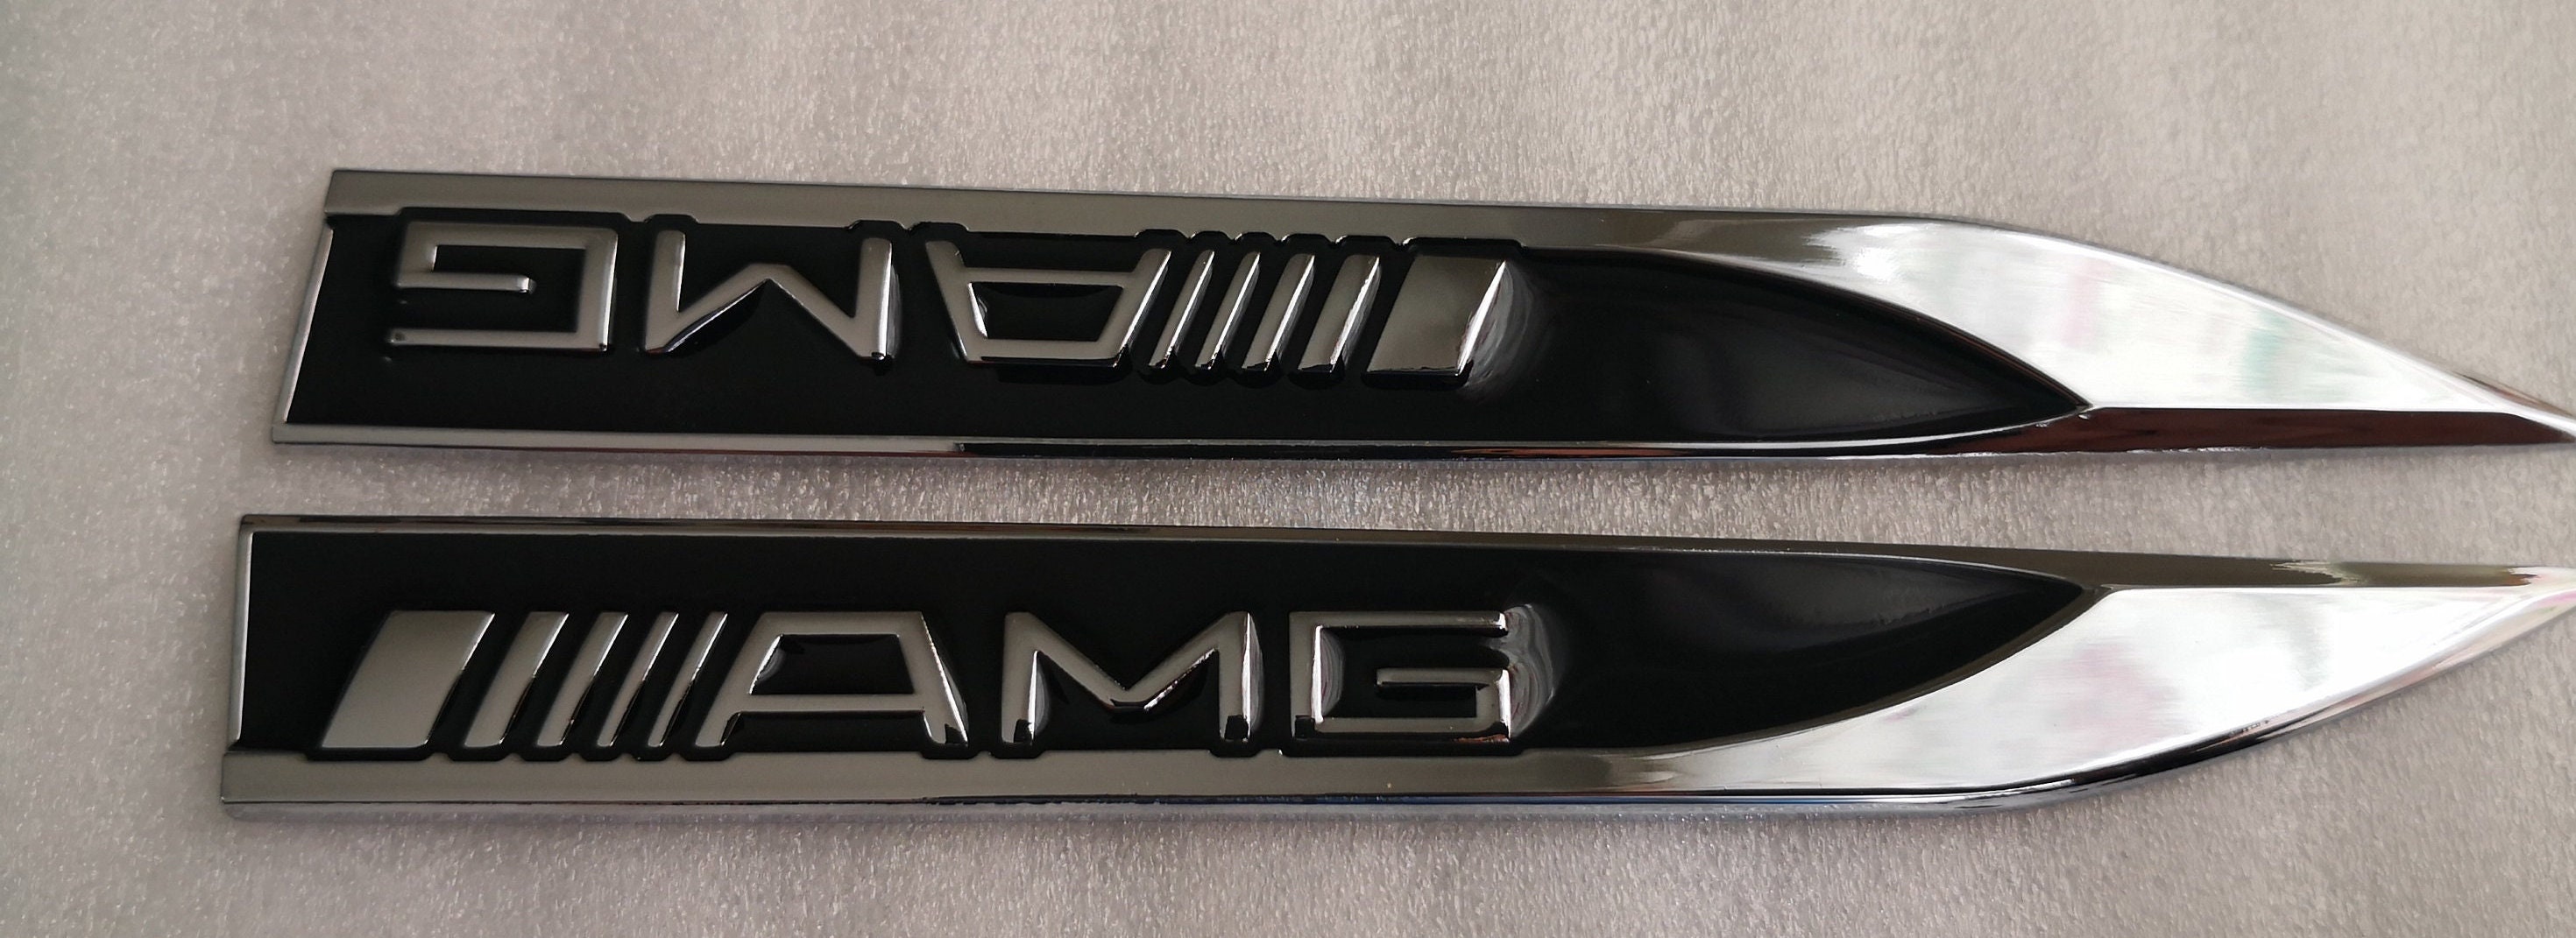 Duplicatie ik heb honger fusie Amg Mercedes 3D Side Fender Badges Left and Right Silver on - Etsy